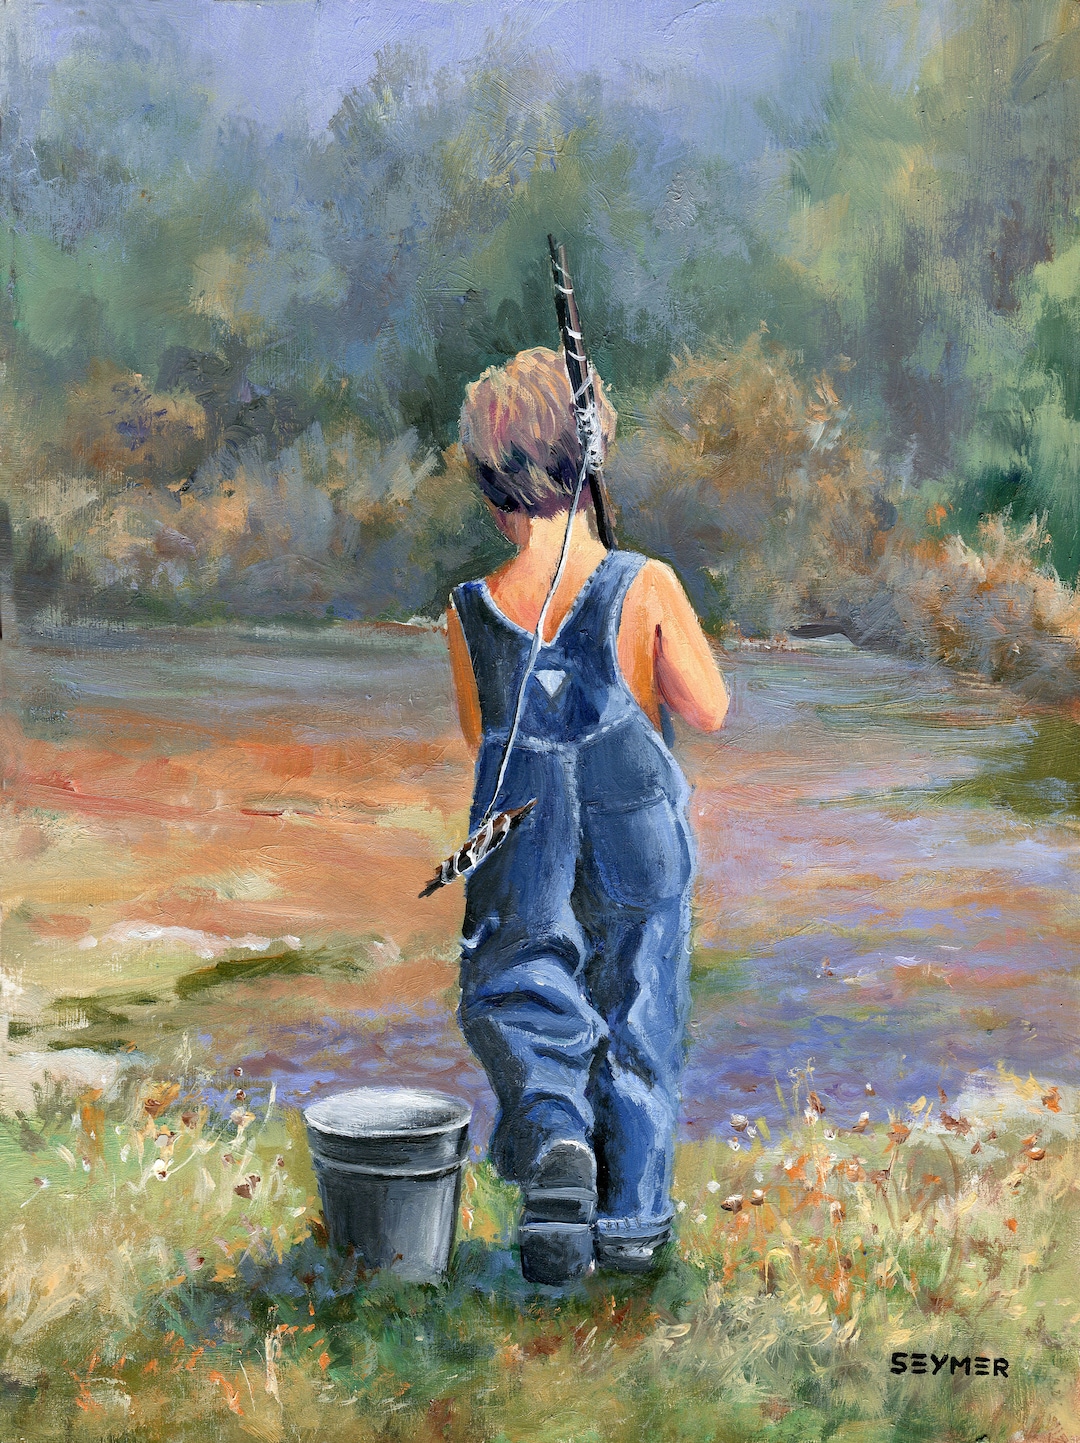 Fishing Boy Painting by Mountain Dreams - Fine Art America